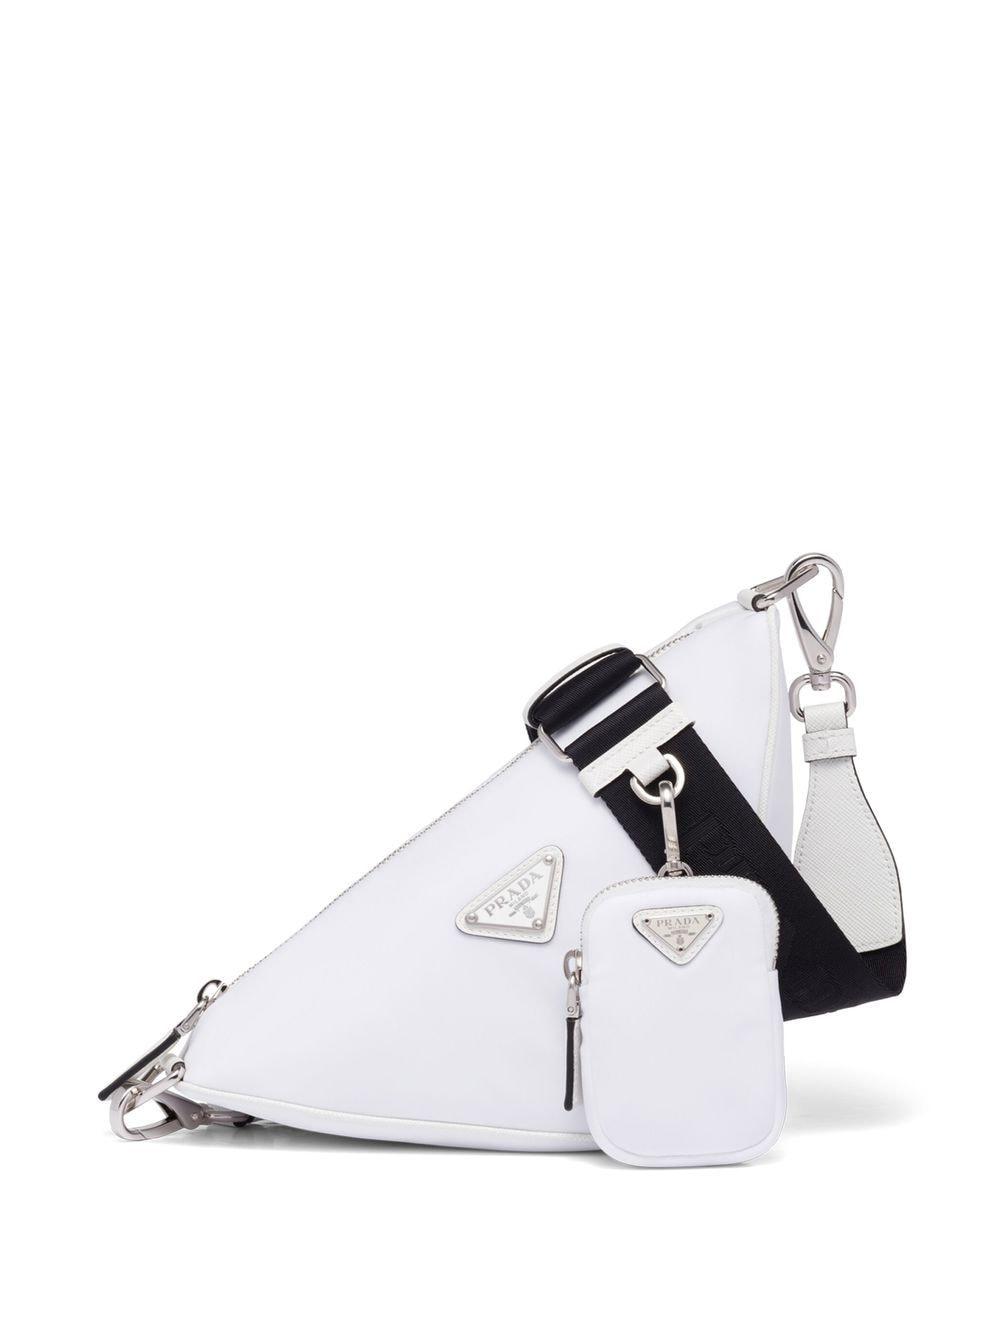 Prada Triangle Re-nylon Shoulder Bag in White | Lyst